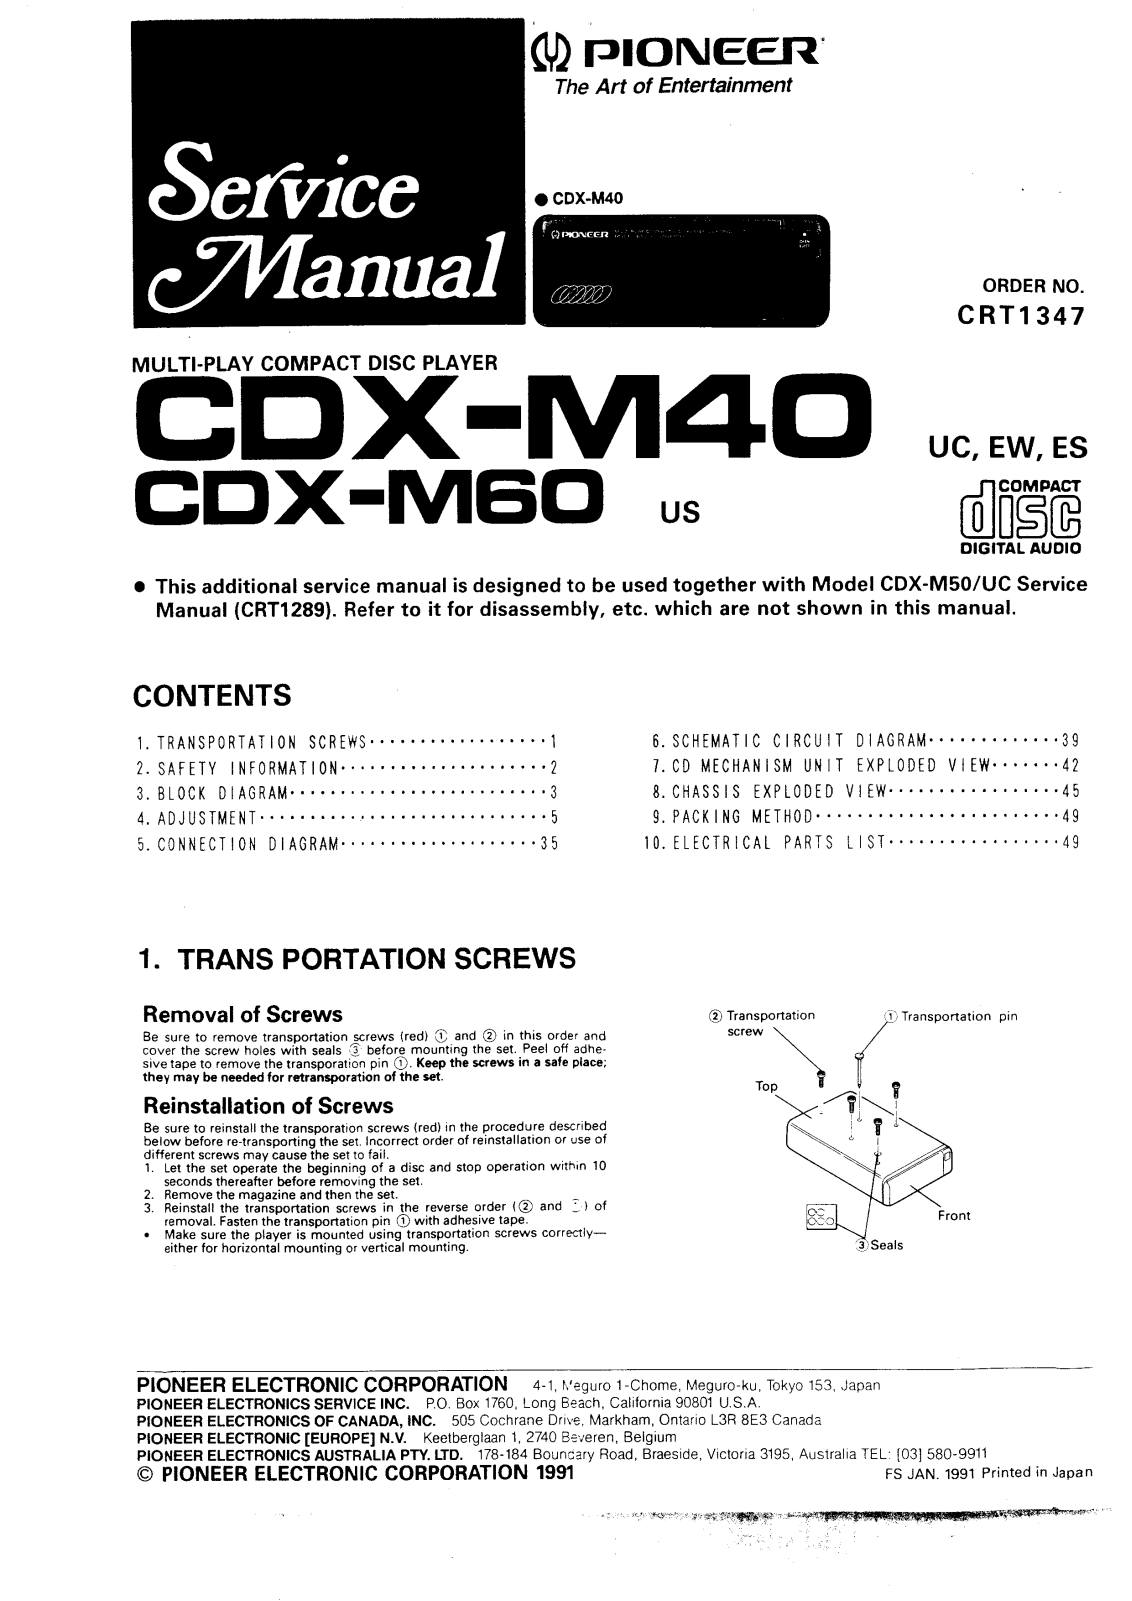 Pioneer CDX-M60, CDX-M40 Manual